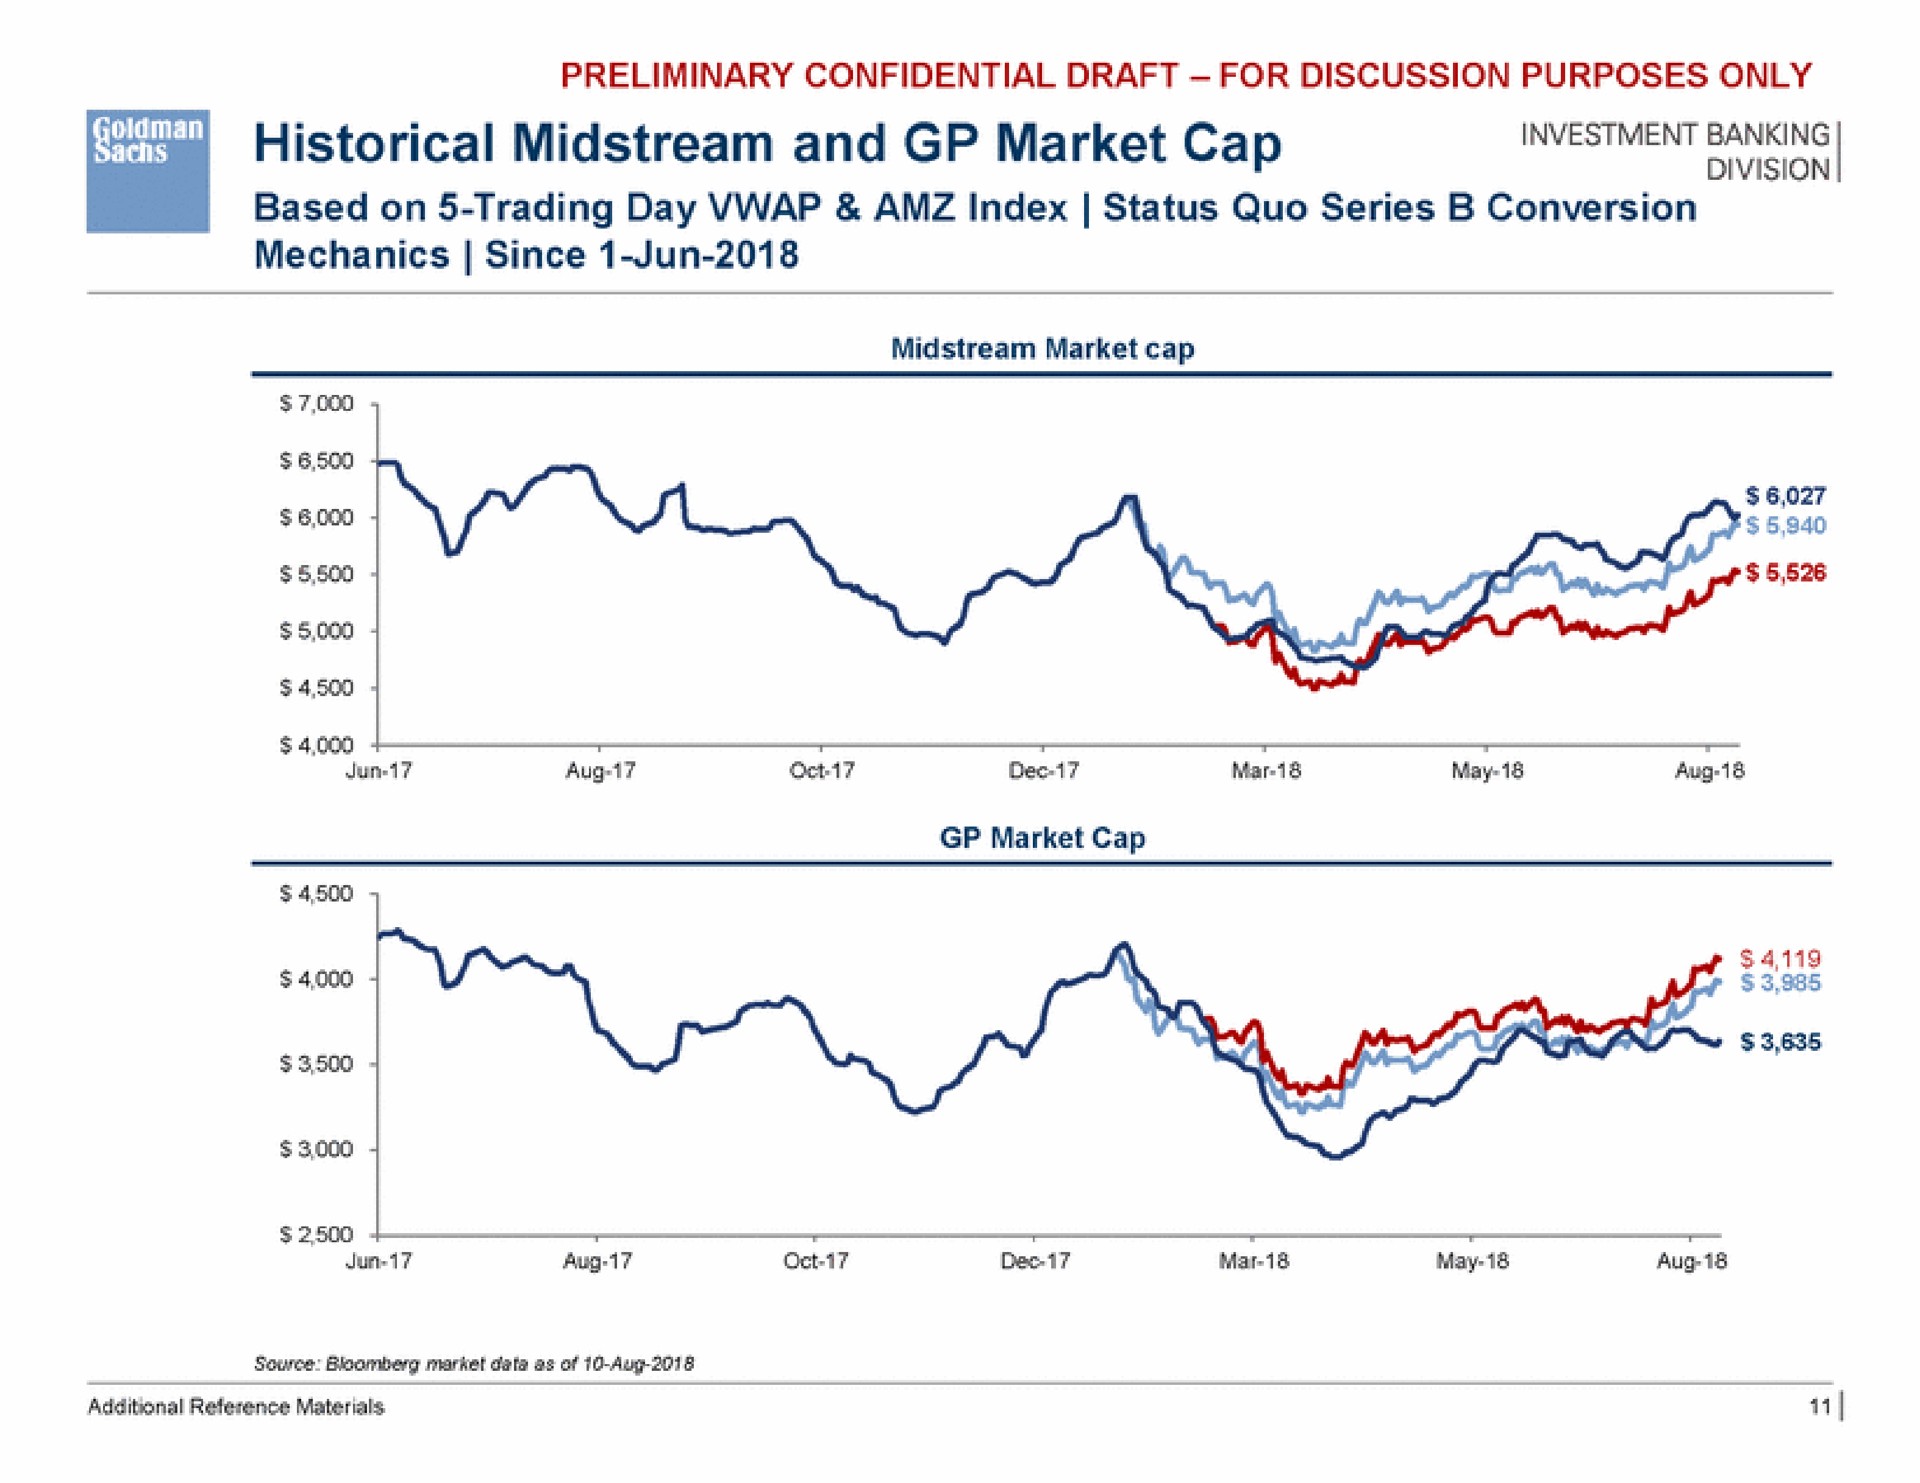 vision historical midstream and market cap me | Goldman Sachs